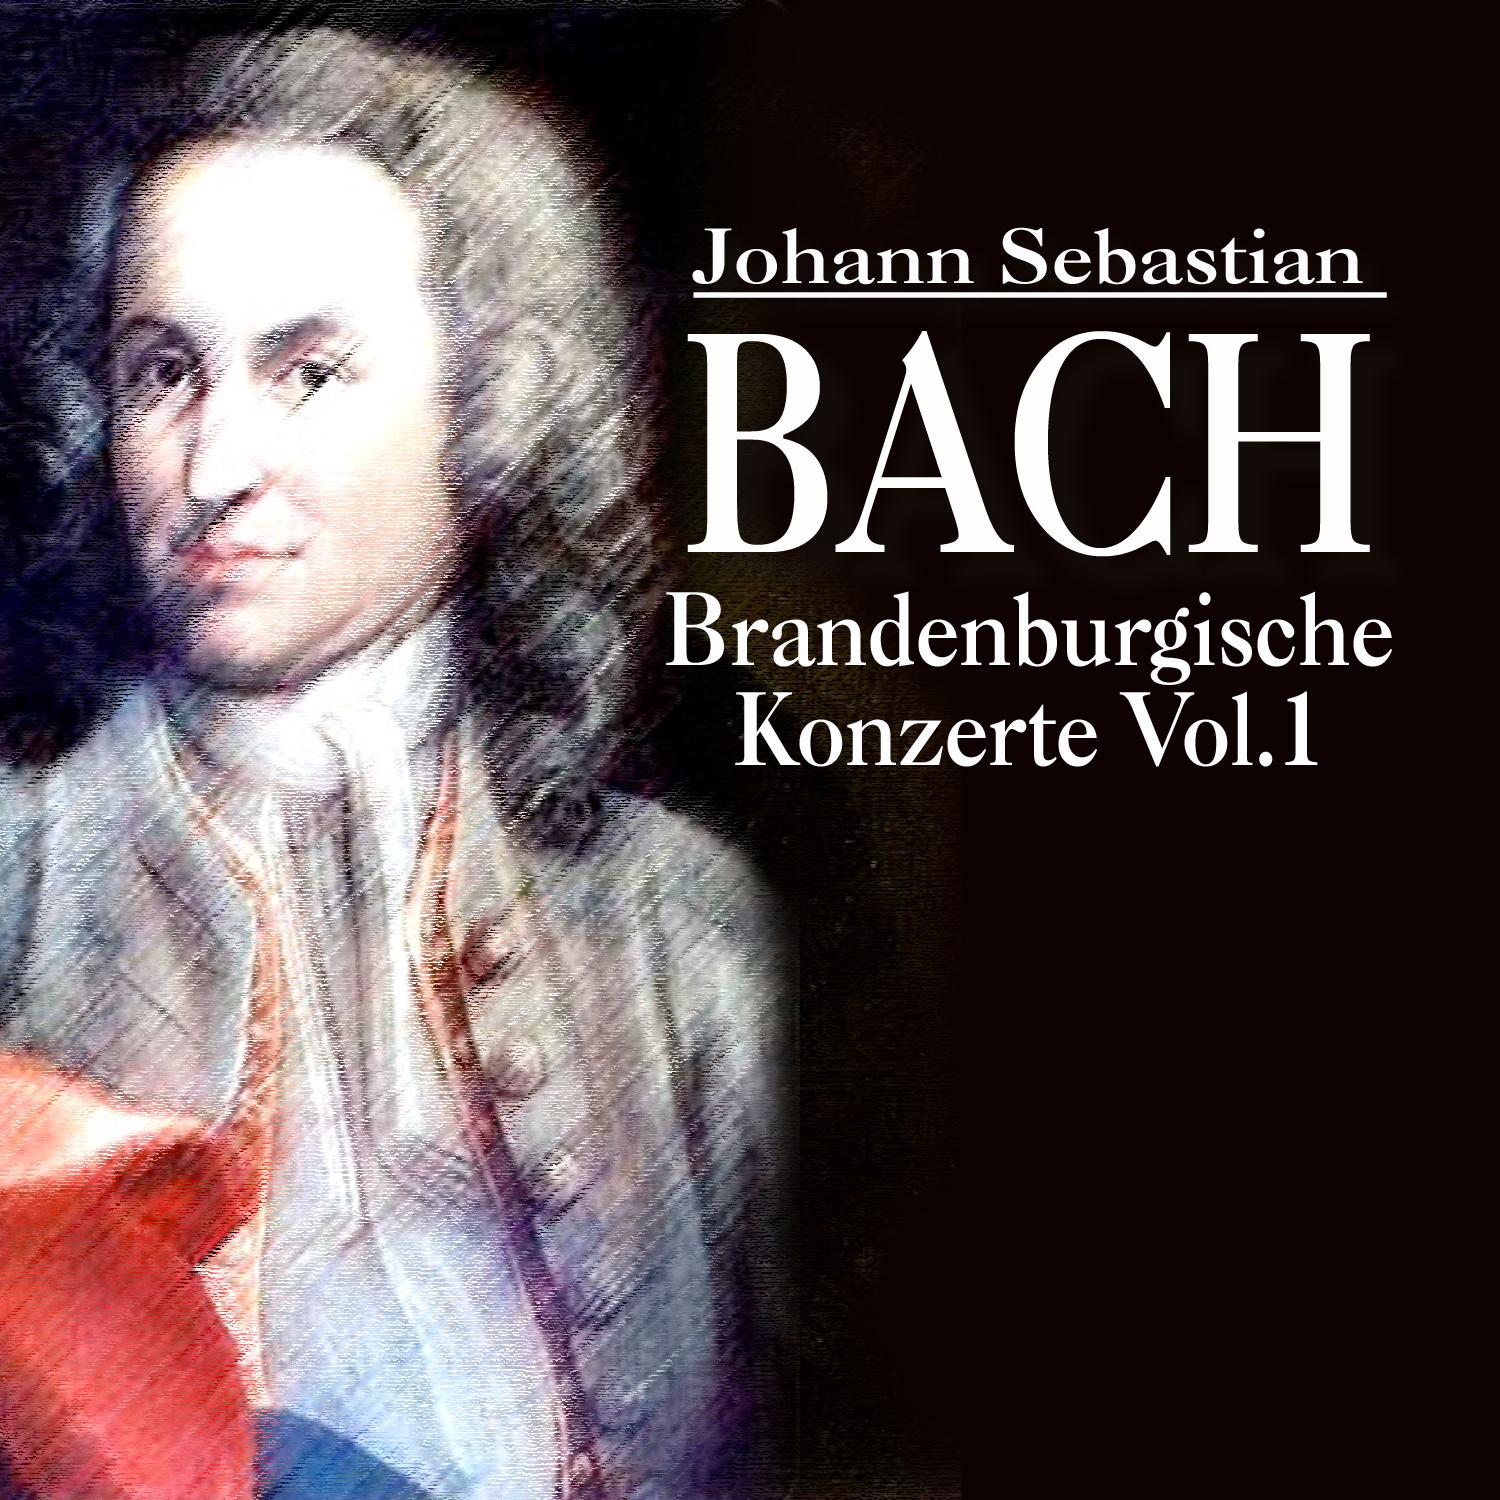 Johann Sebastian Bach - Brandenburgische Konzerte Vol.1